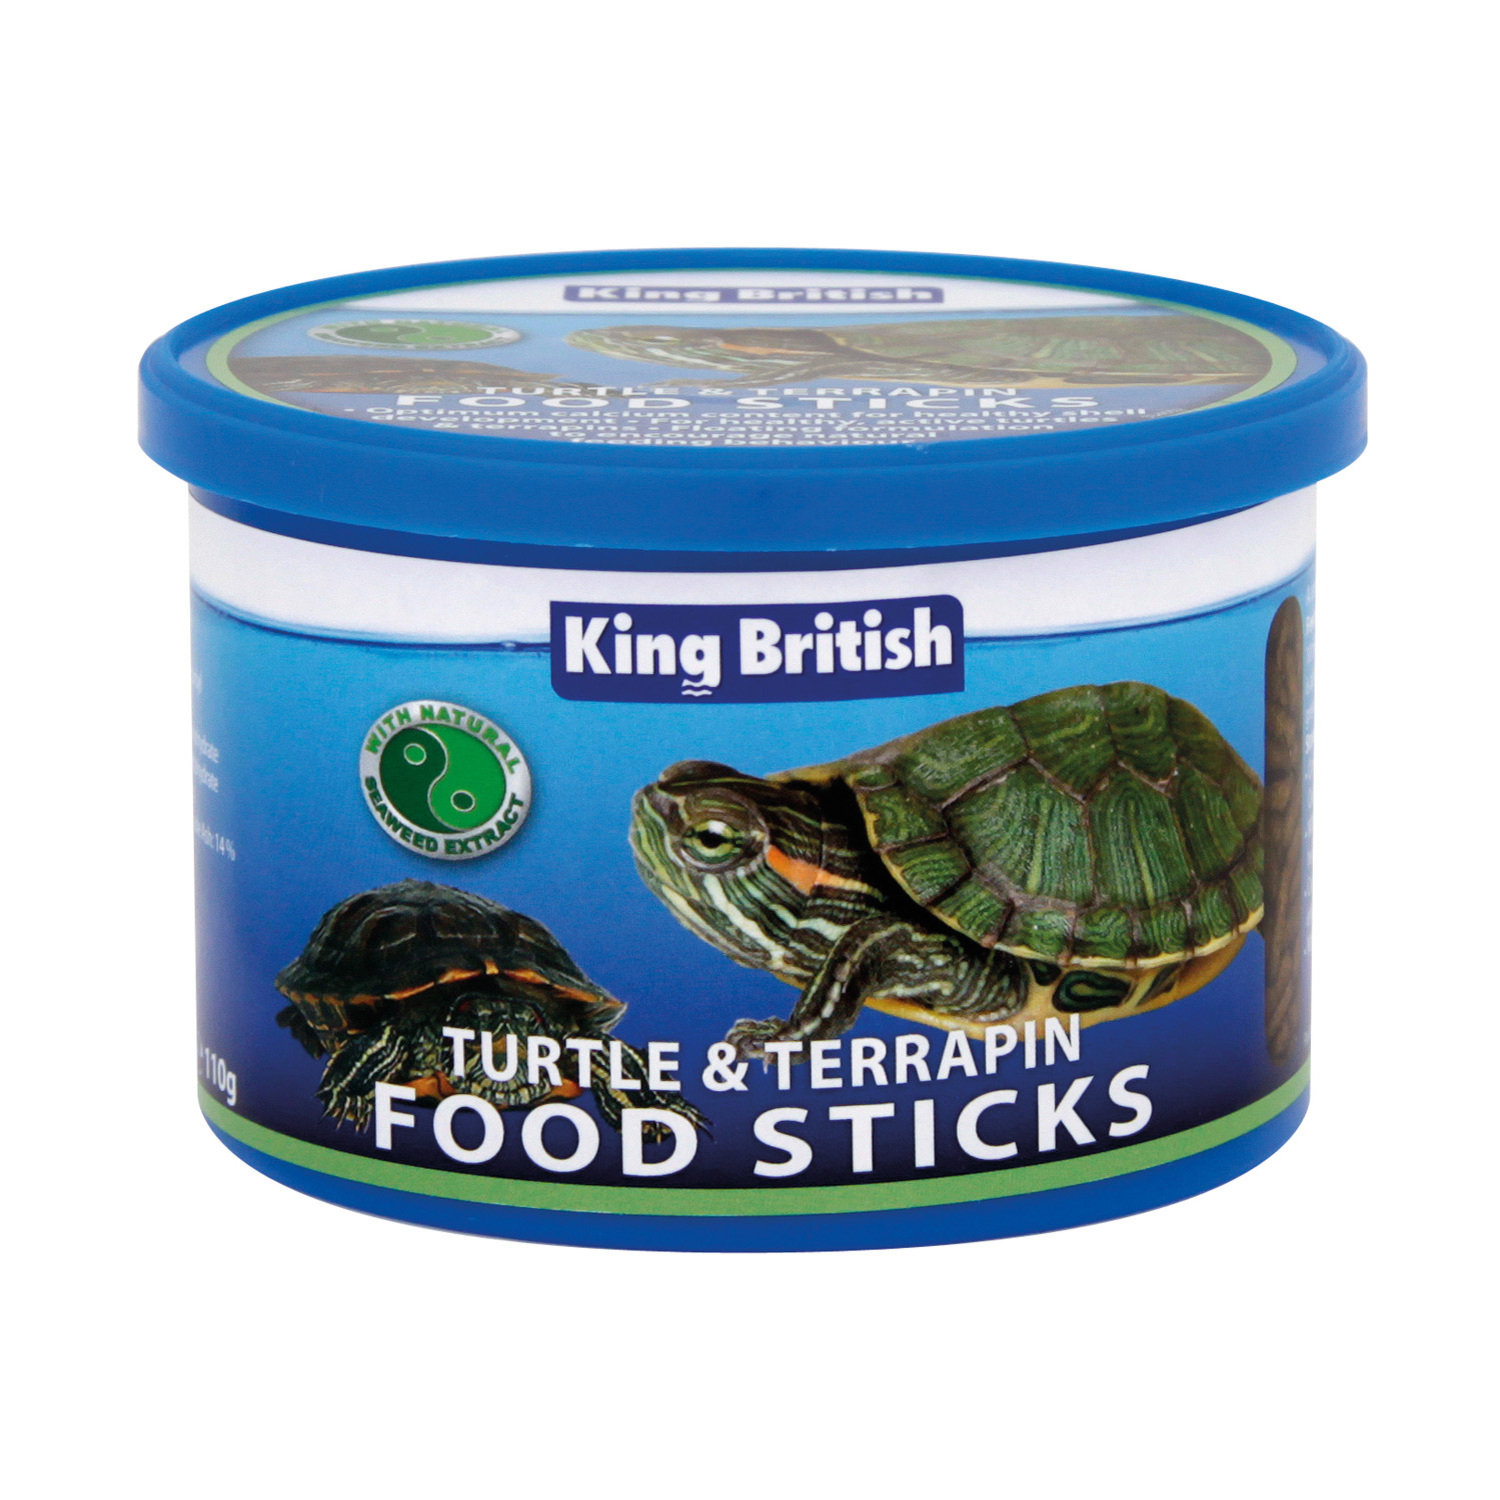 King British Turtle and Terrapin Food Sticks Image